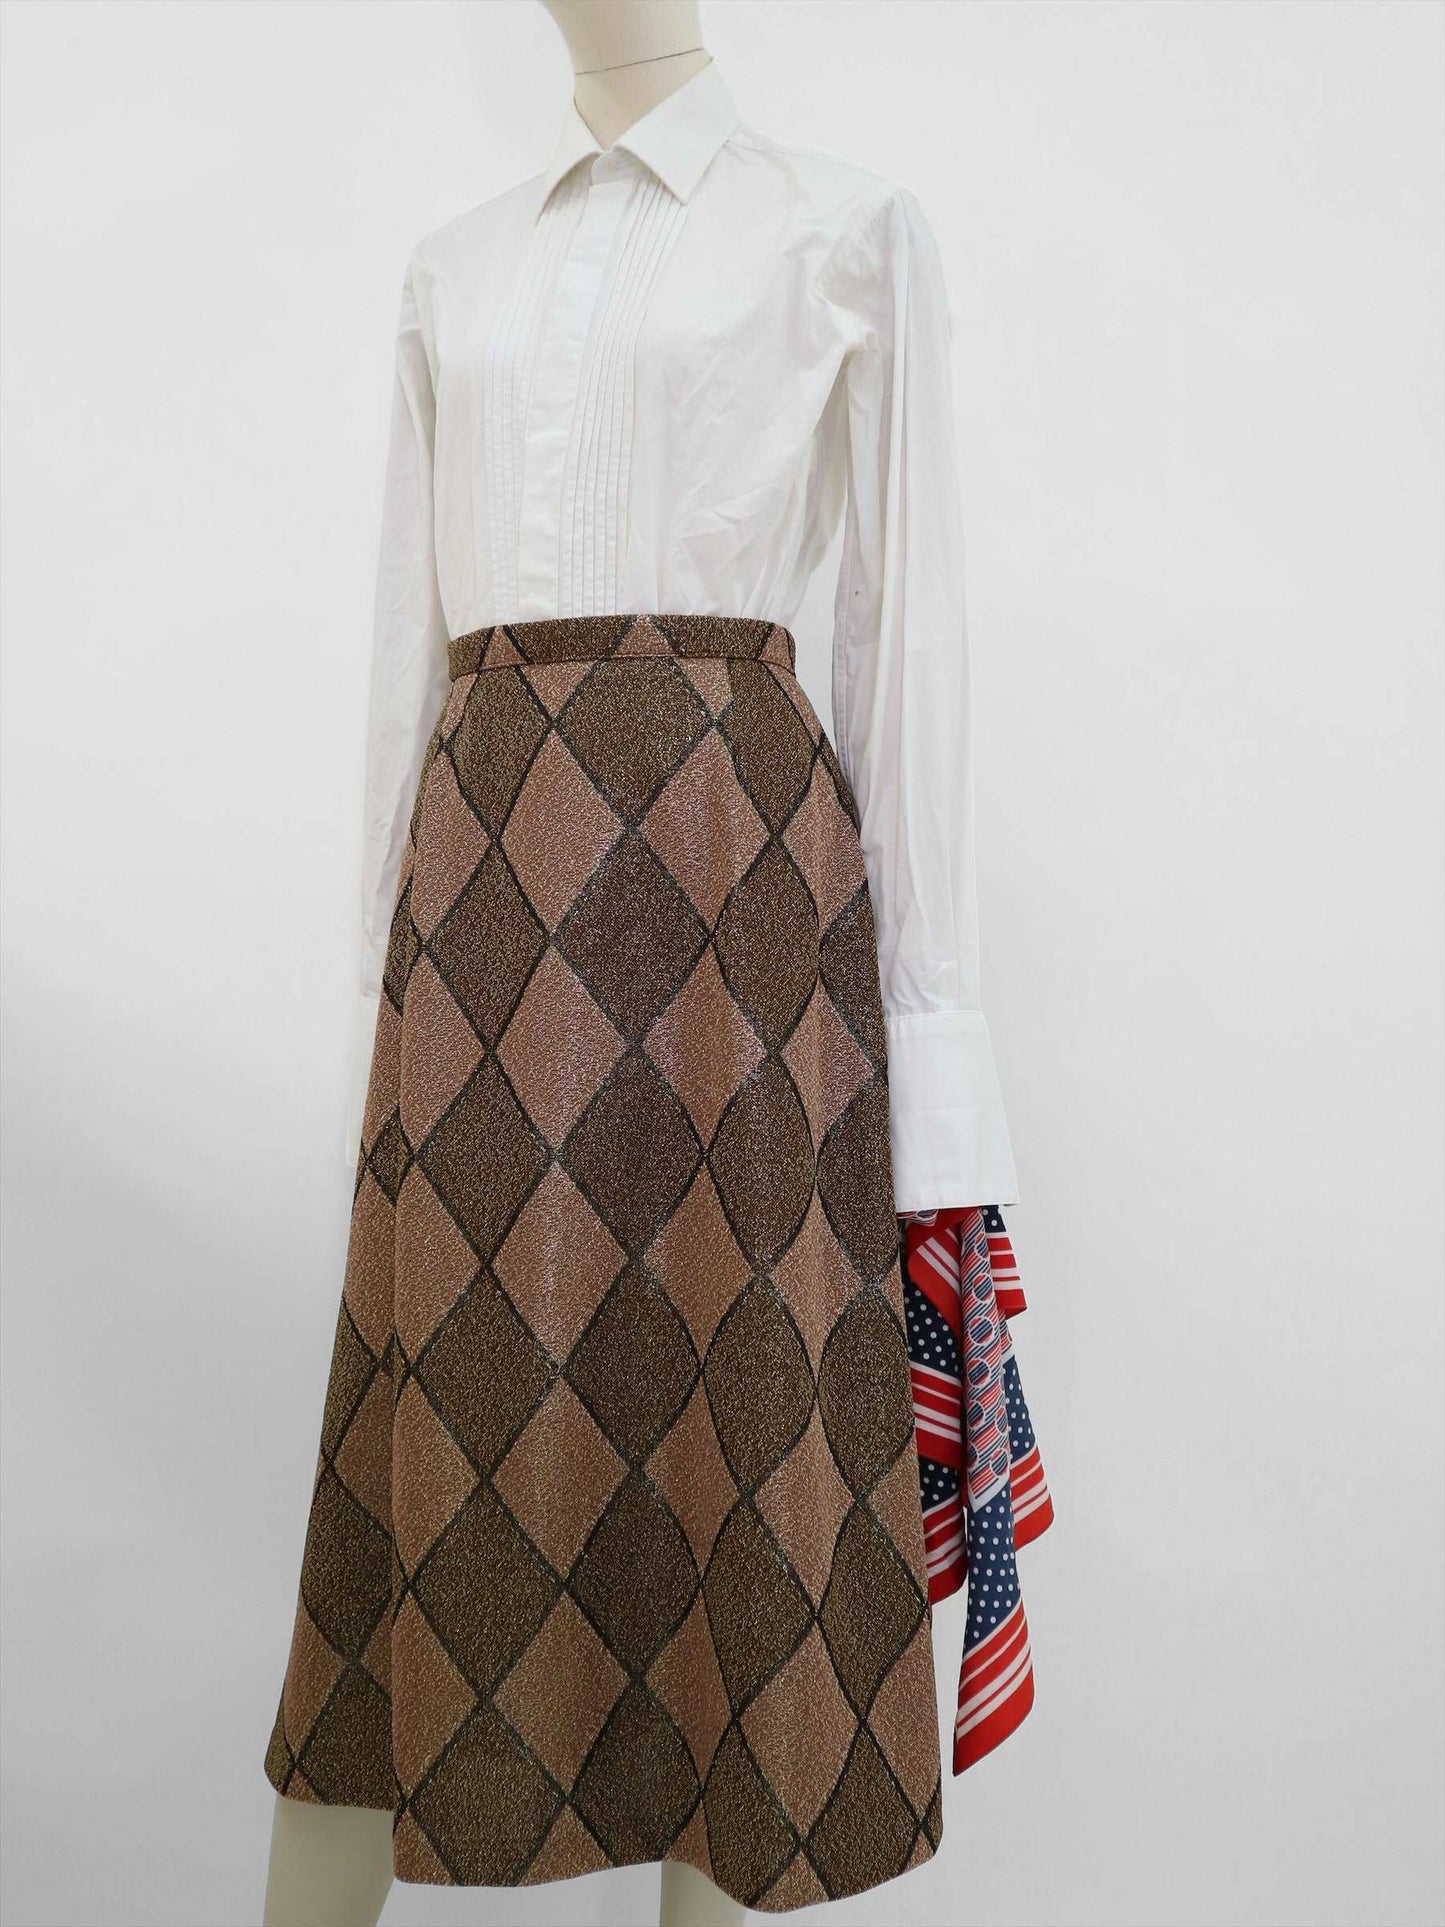 Vintage Dress Shirt by Christian Dior